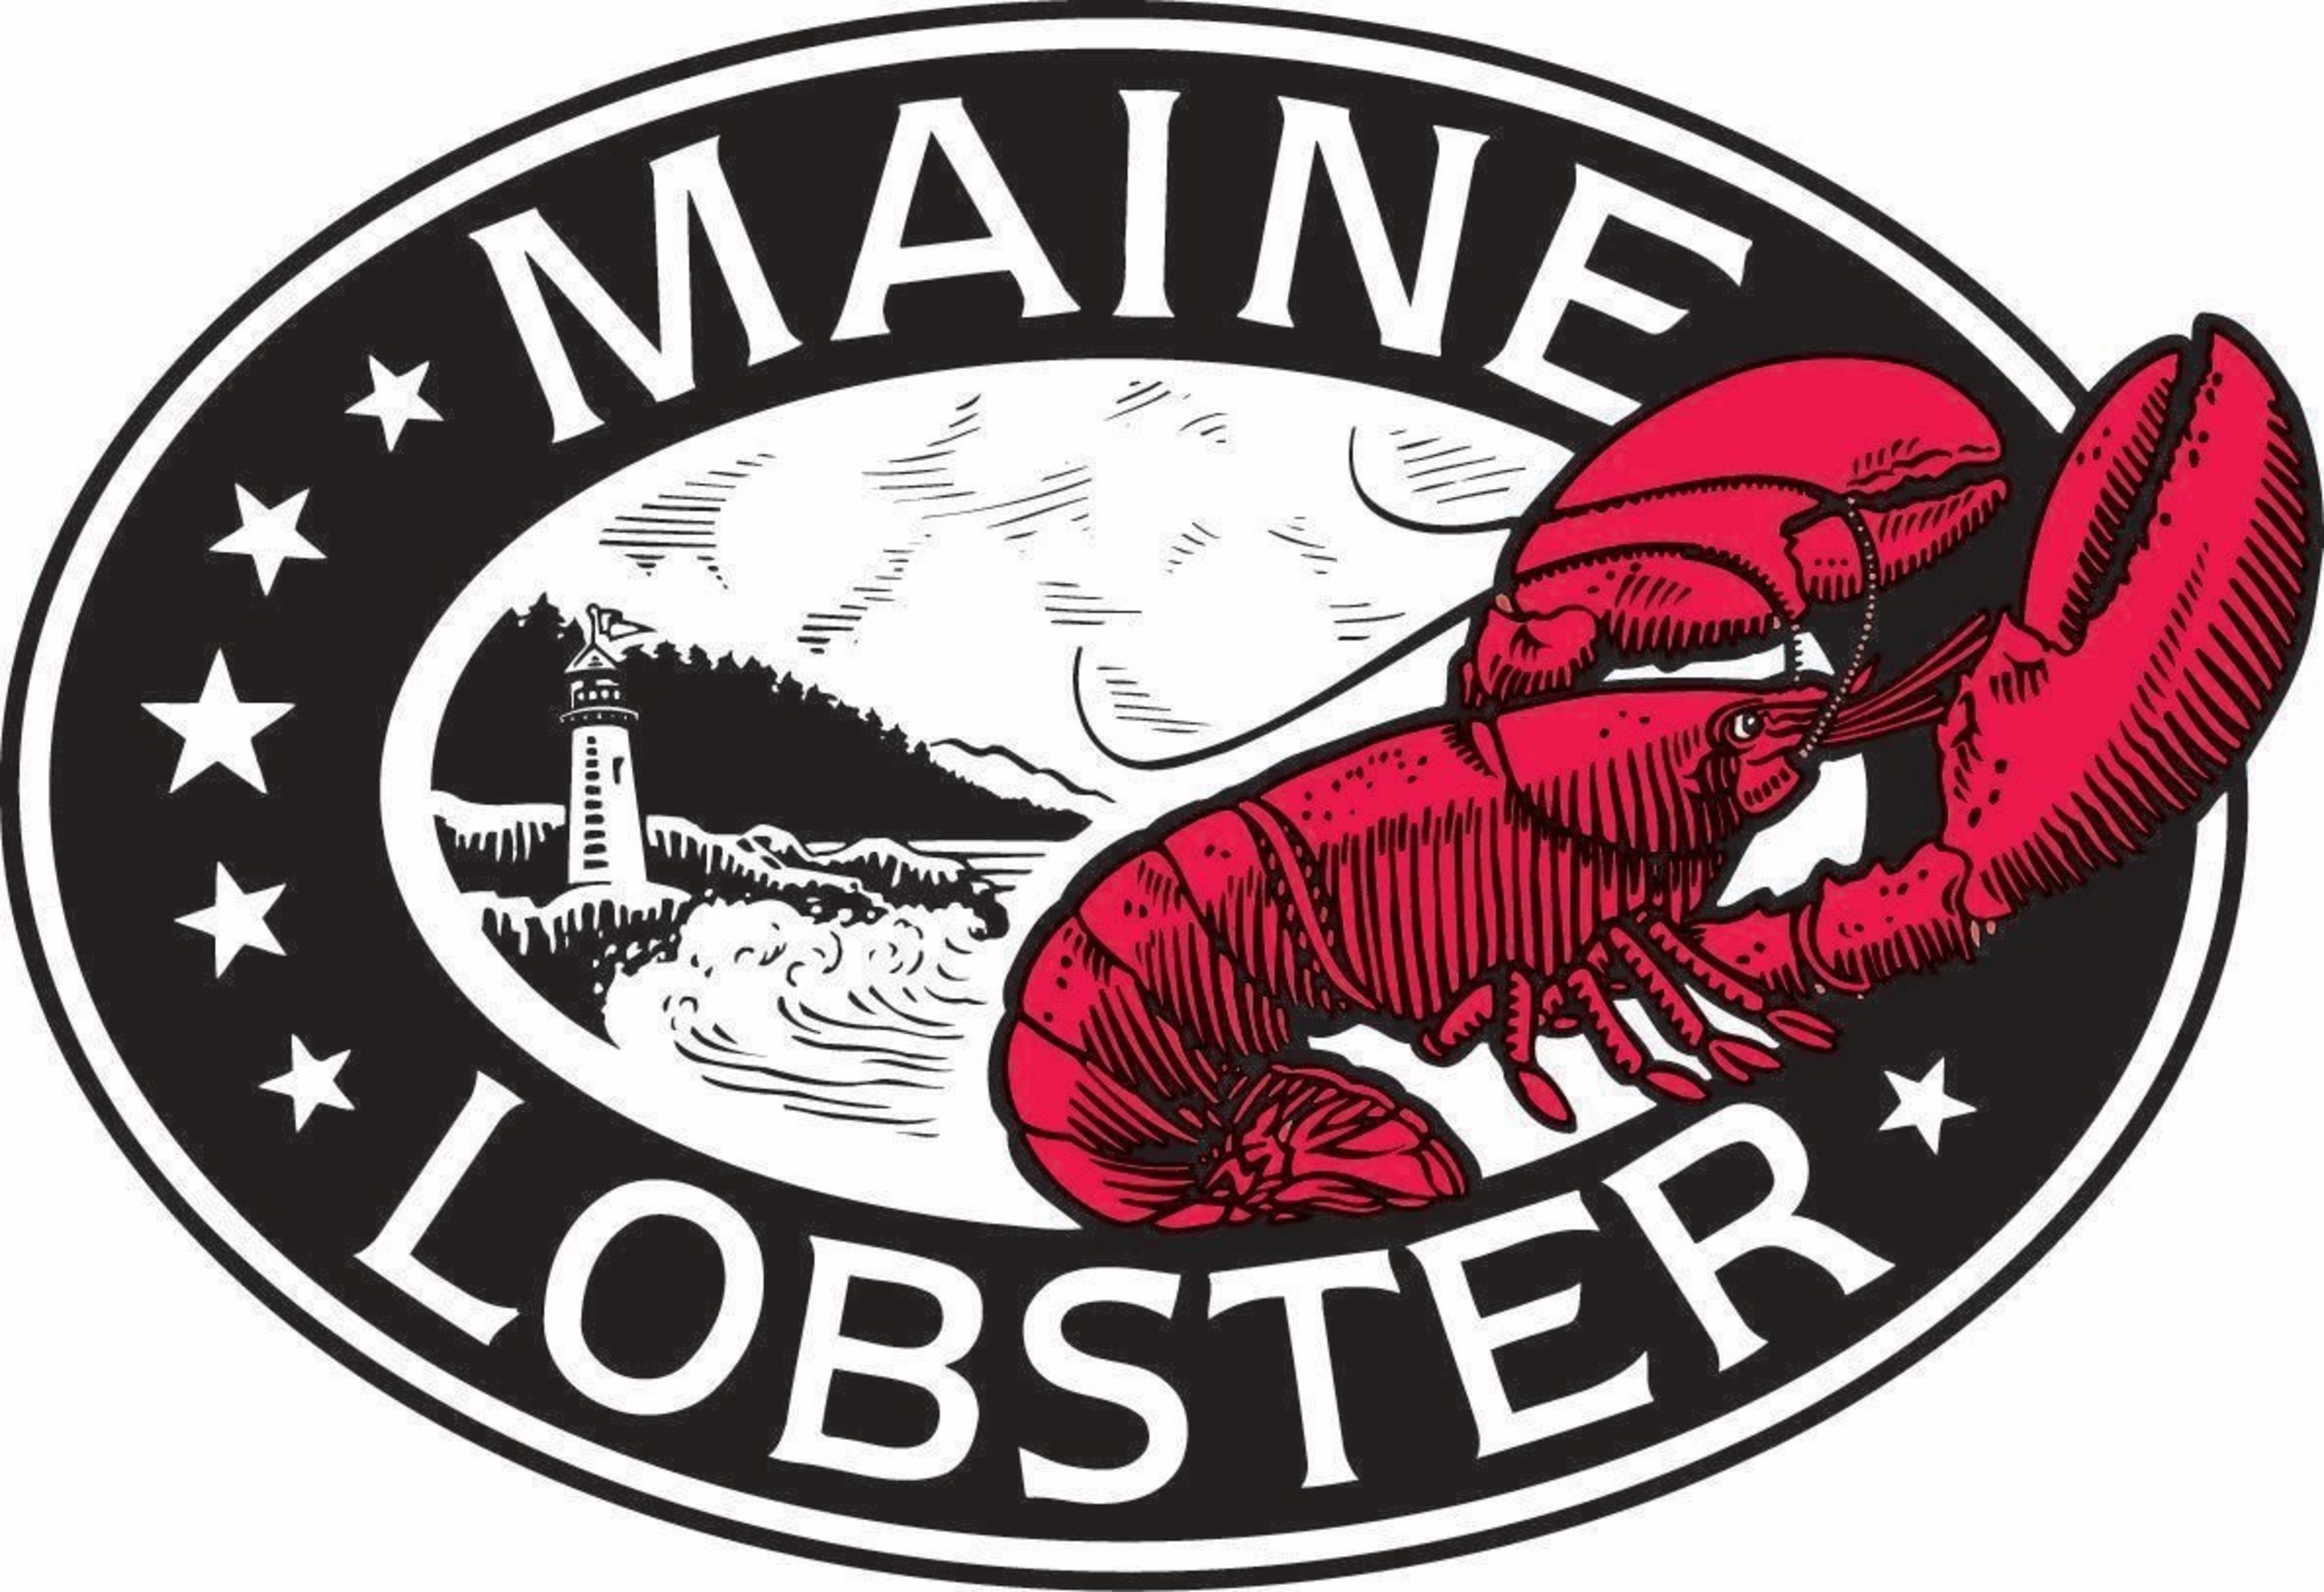 Maine Lobster Marketing Collaborative